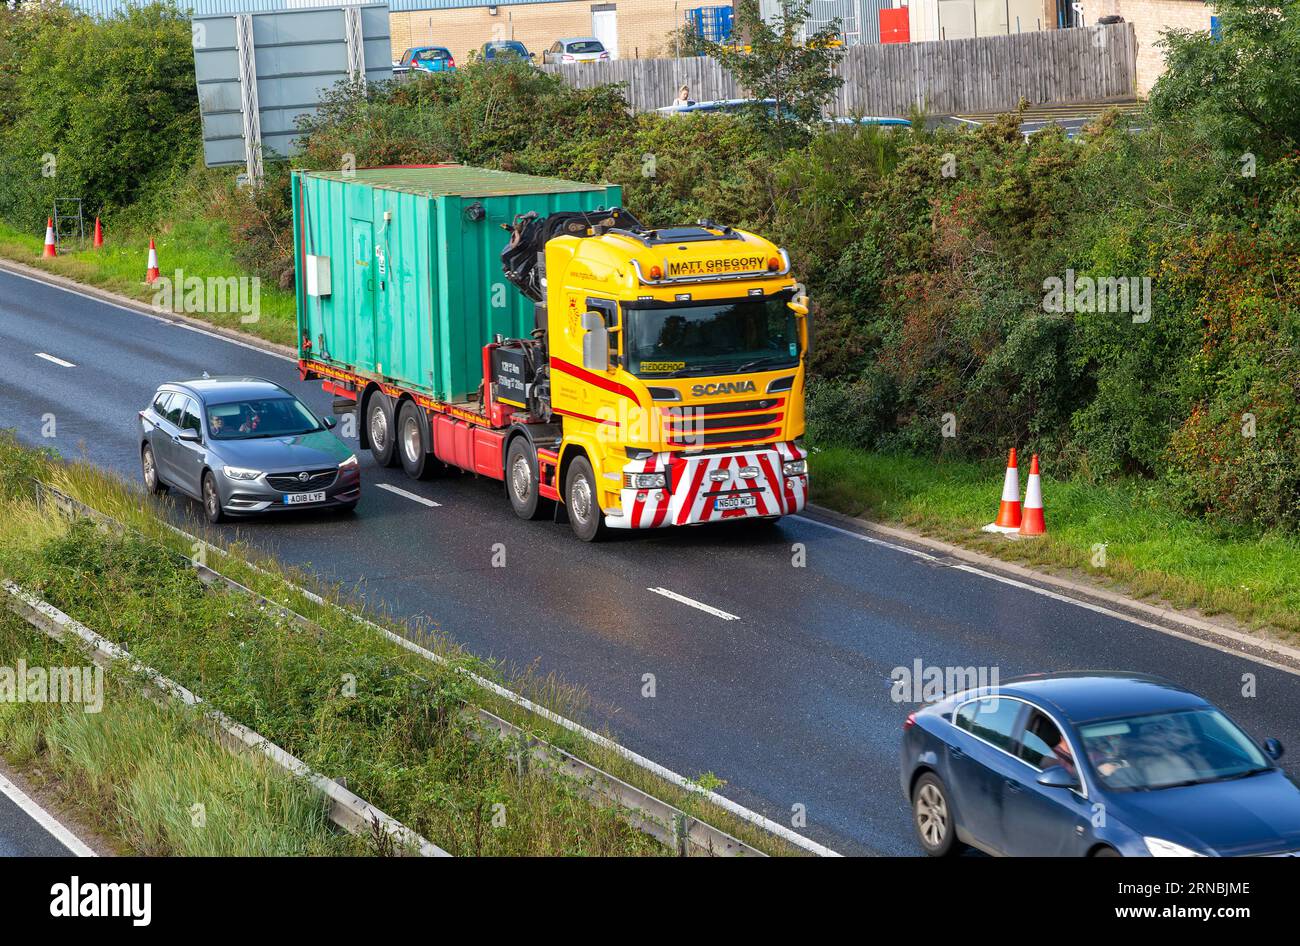 Matt Gregory container transport Scania lorry, A12 dual carriageway main road, Martlesham, Suffolk, England, UK Stock Photo